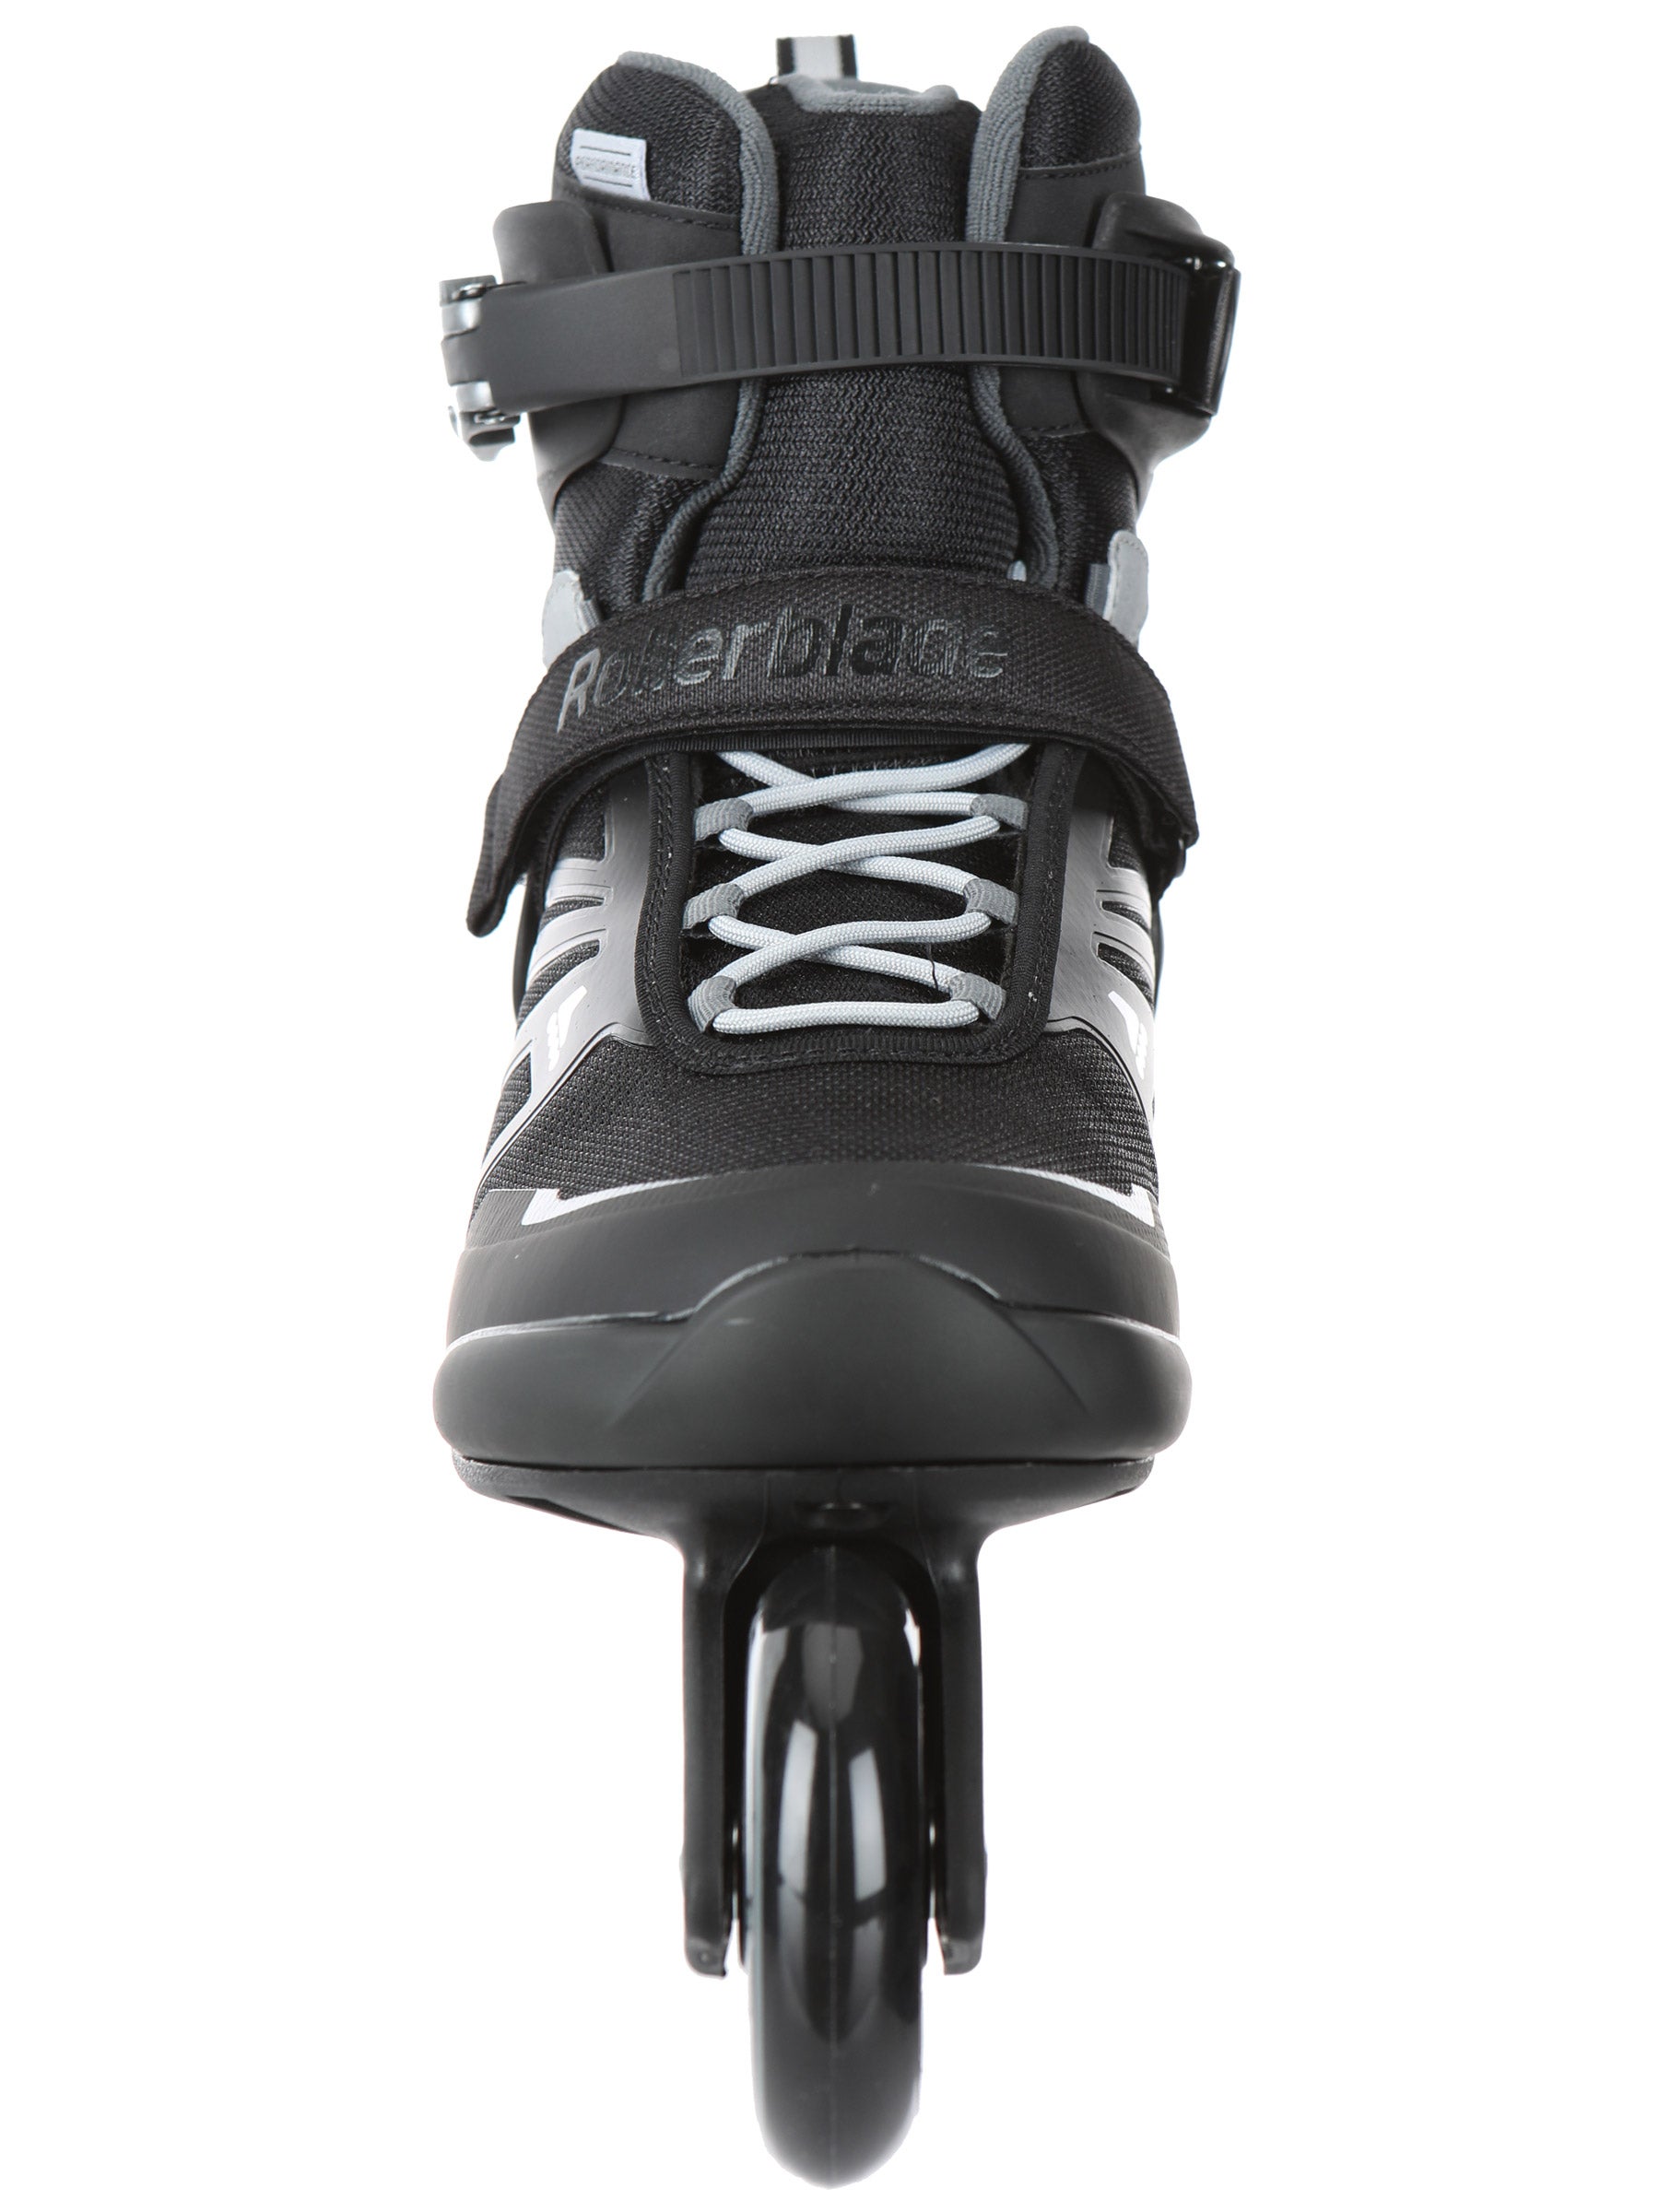 Black/Silver Rollerblade Zetrablade Men's Inline Skates size 10 